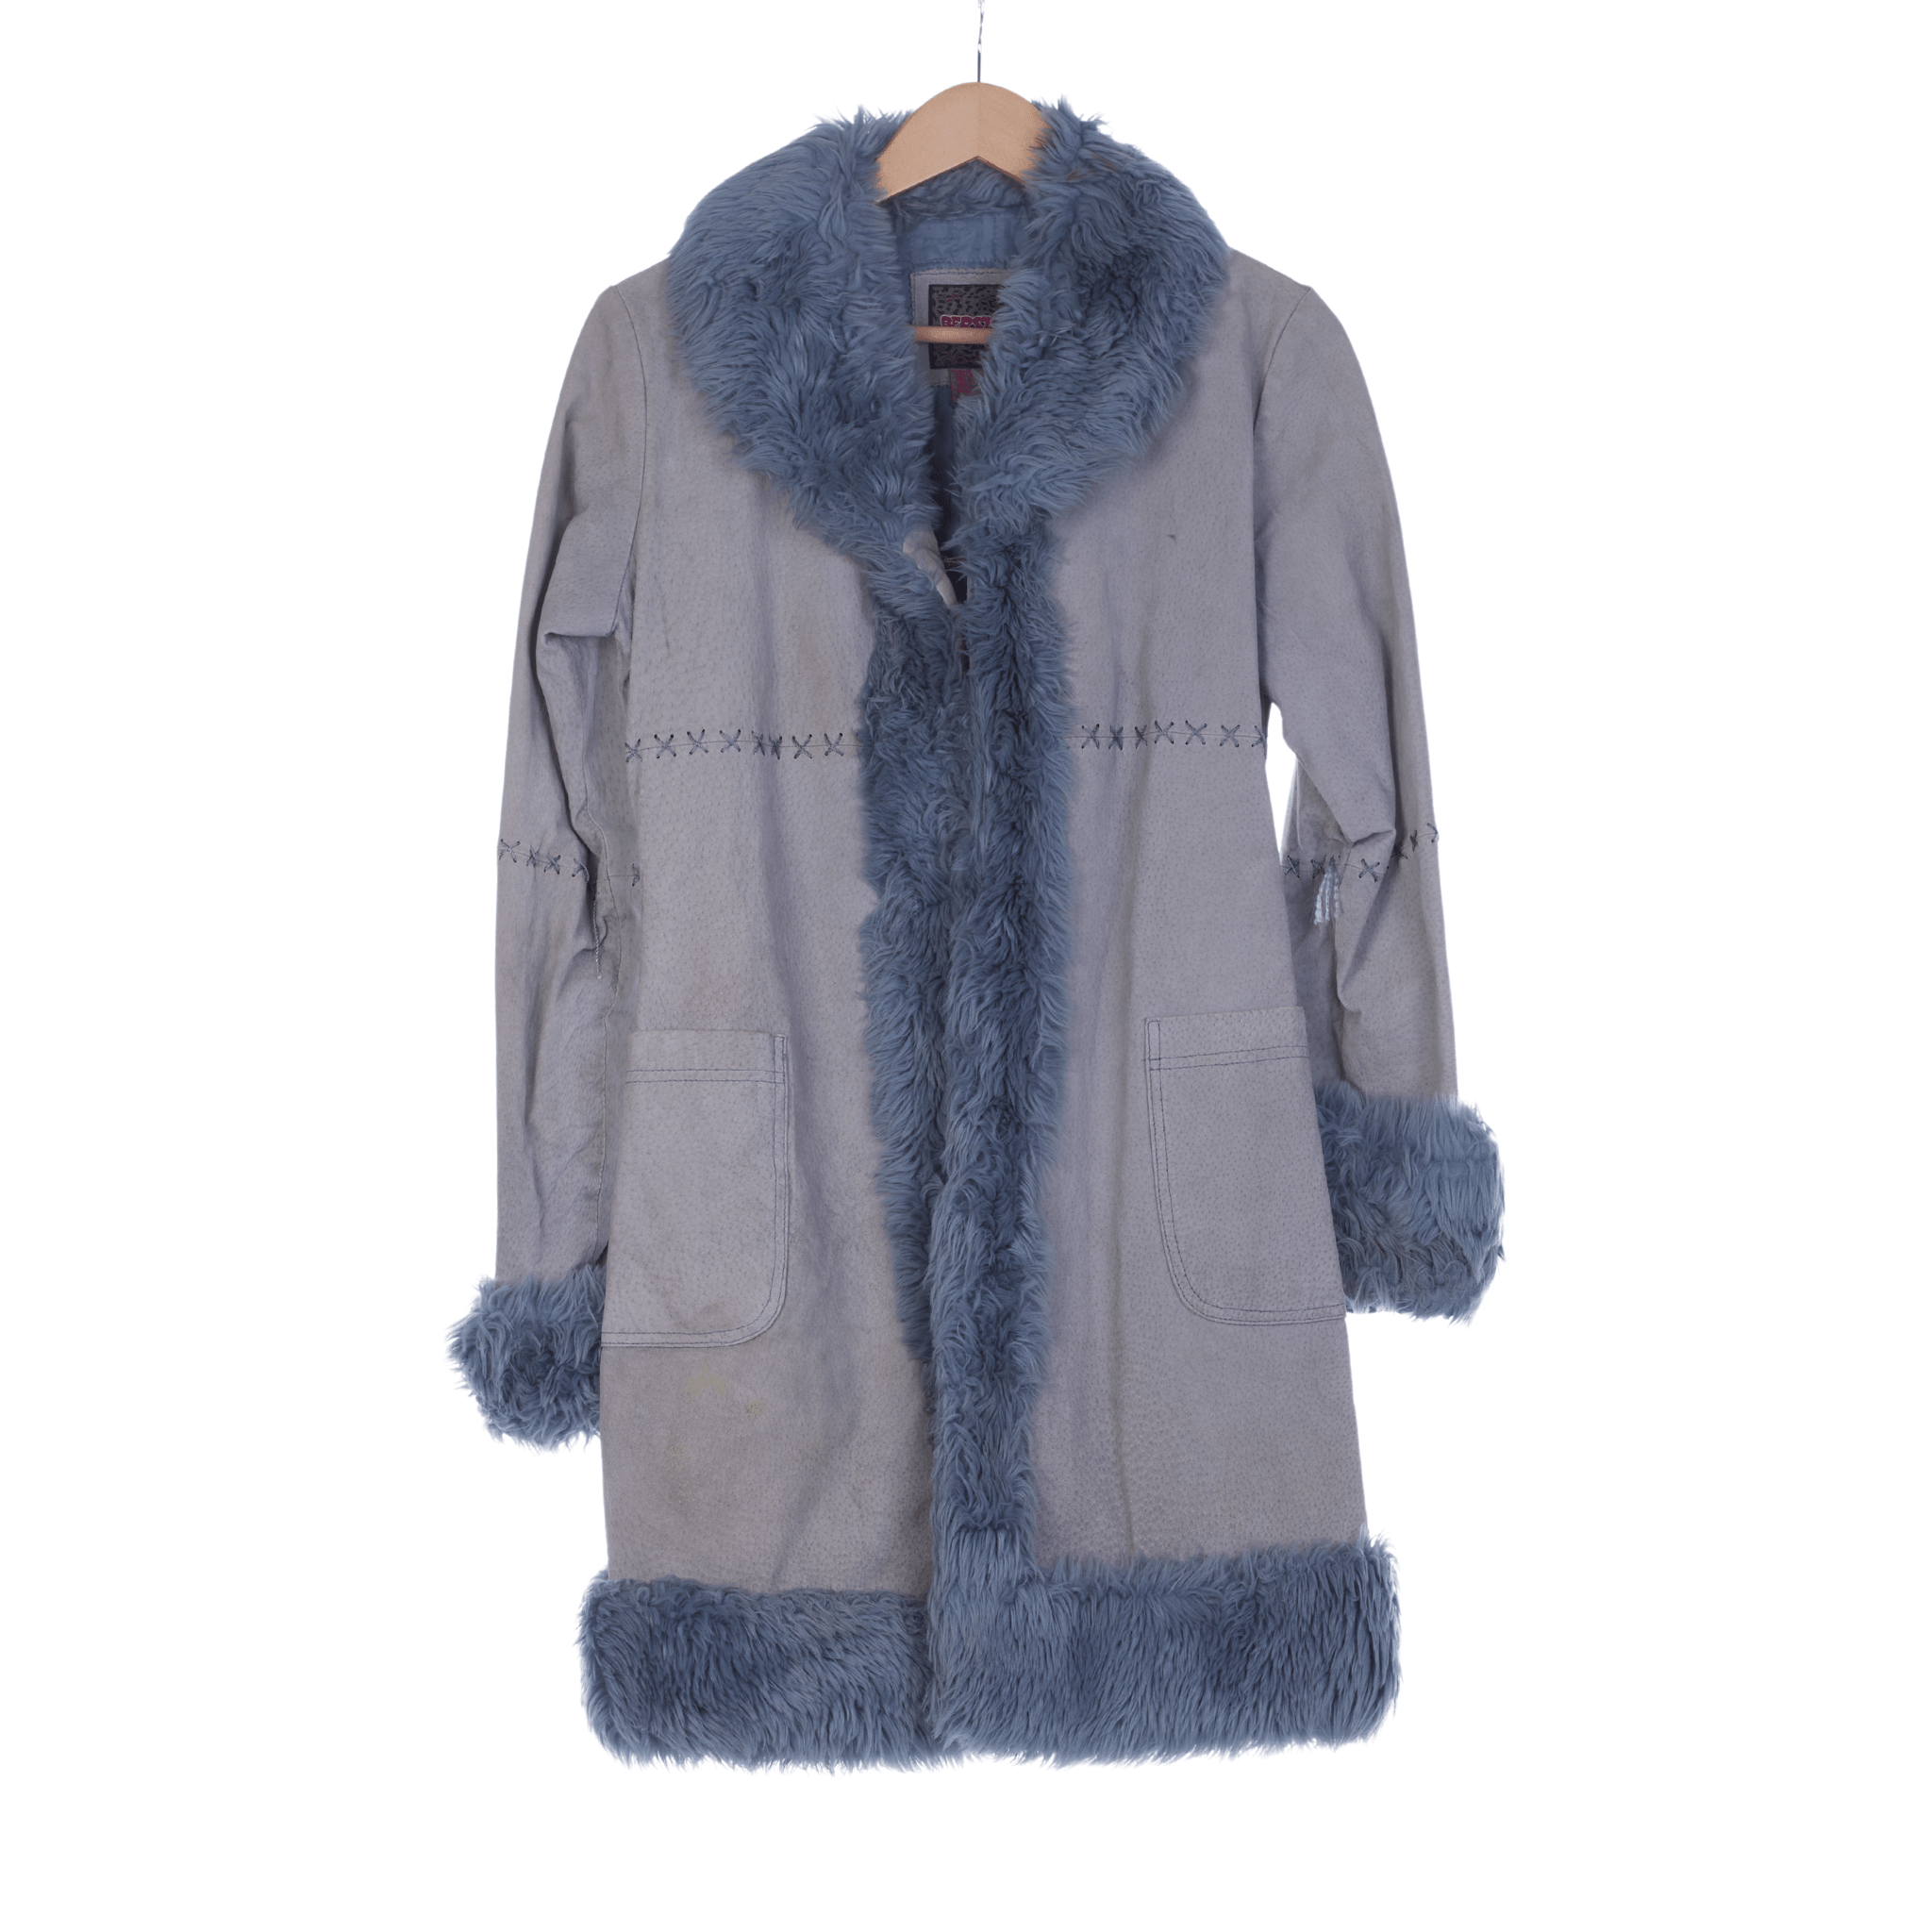 Bershka Leather Faux Fur Collared Grey Long Sleeved Coat UK Size